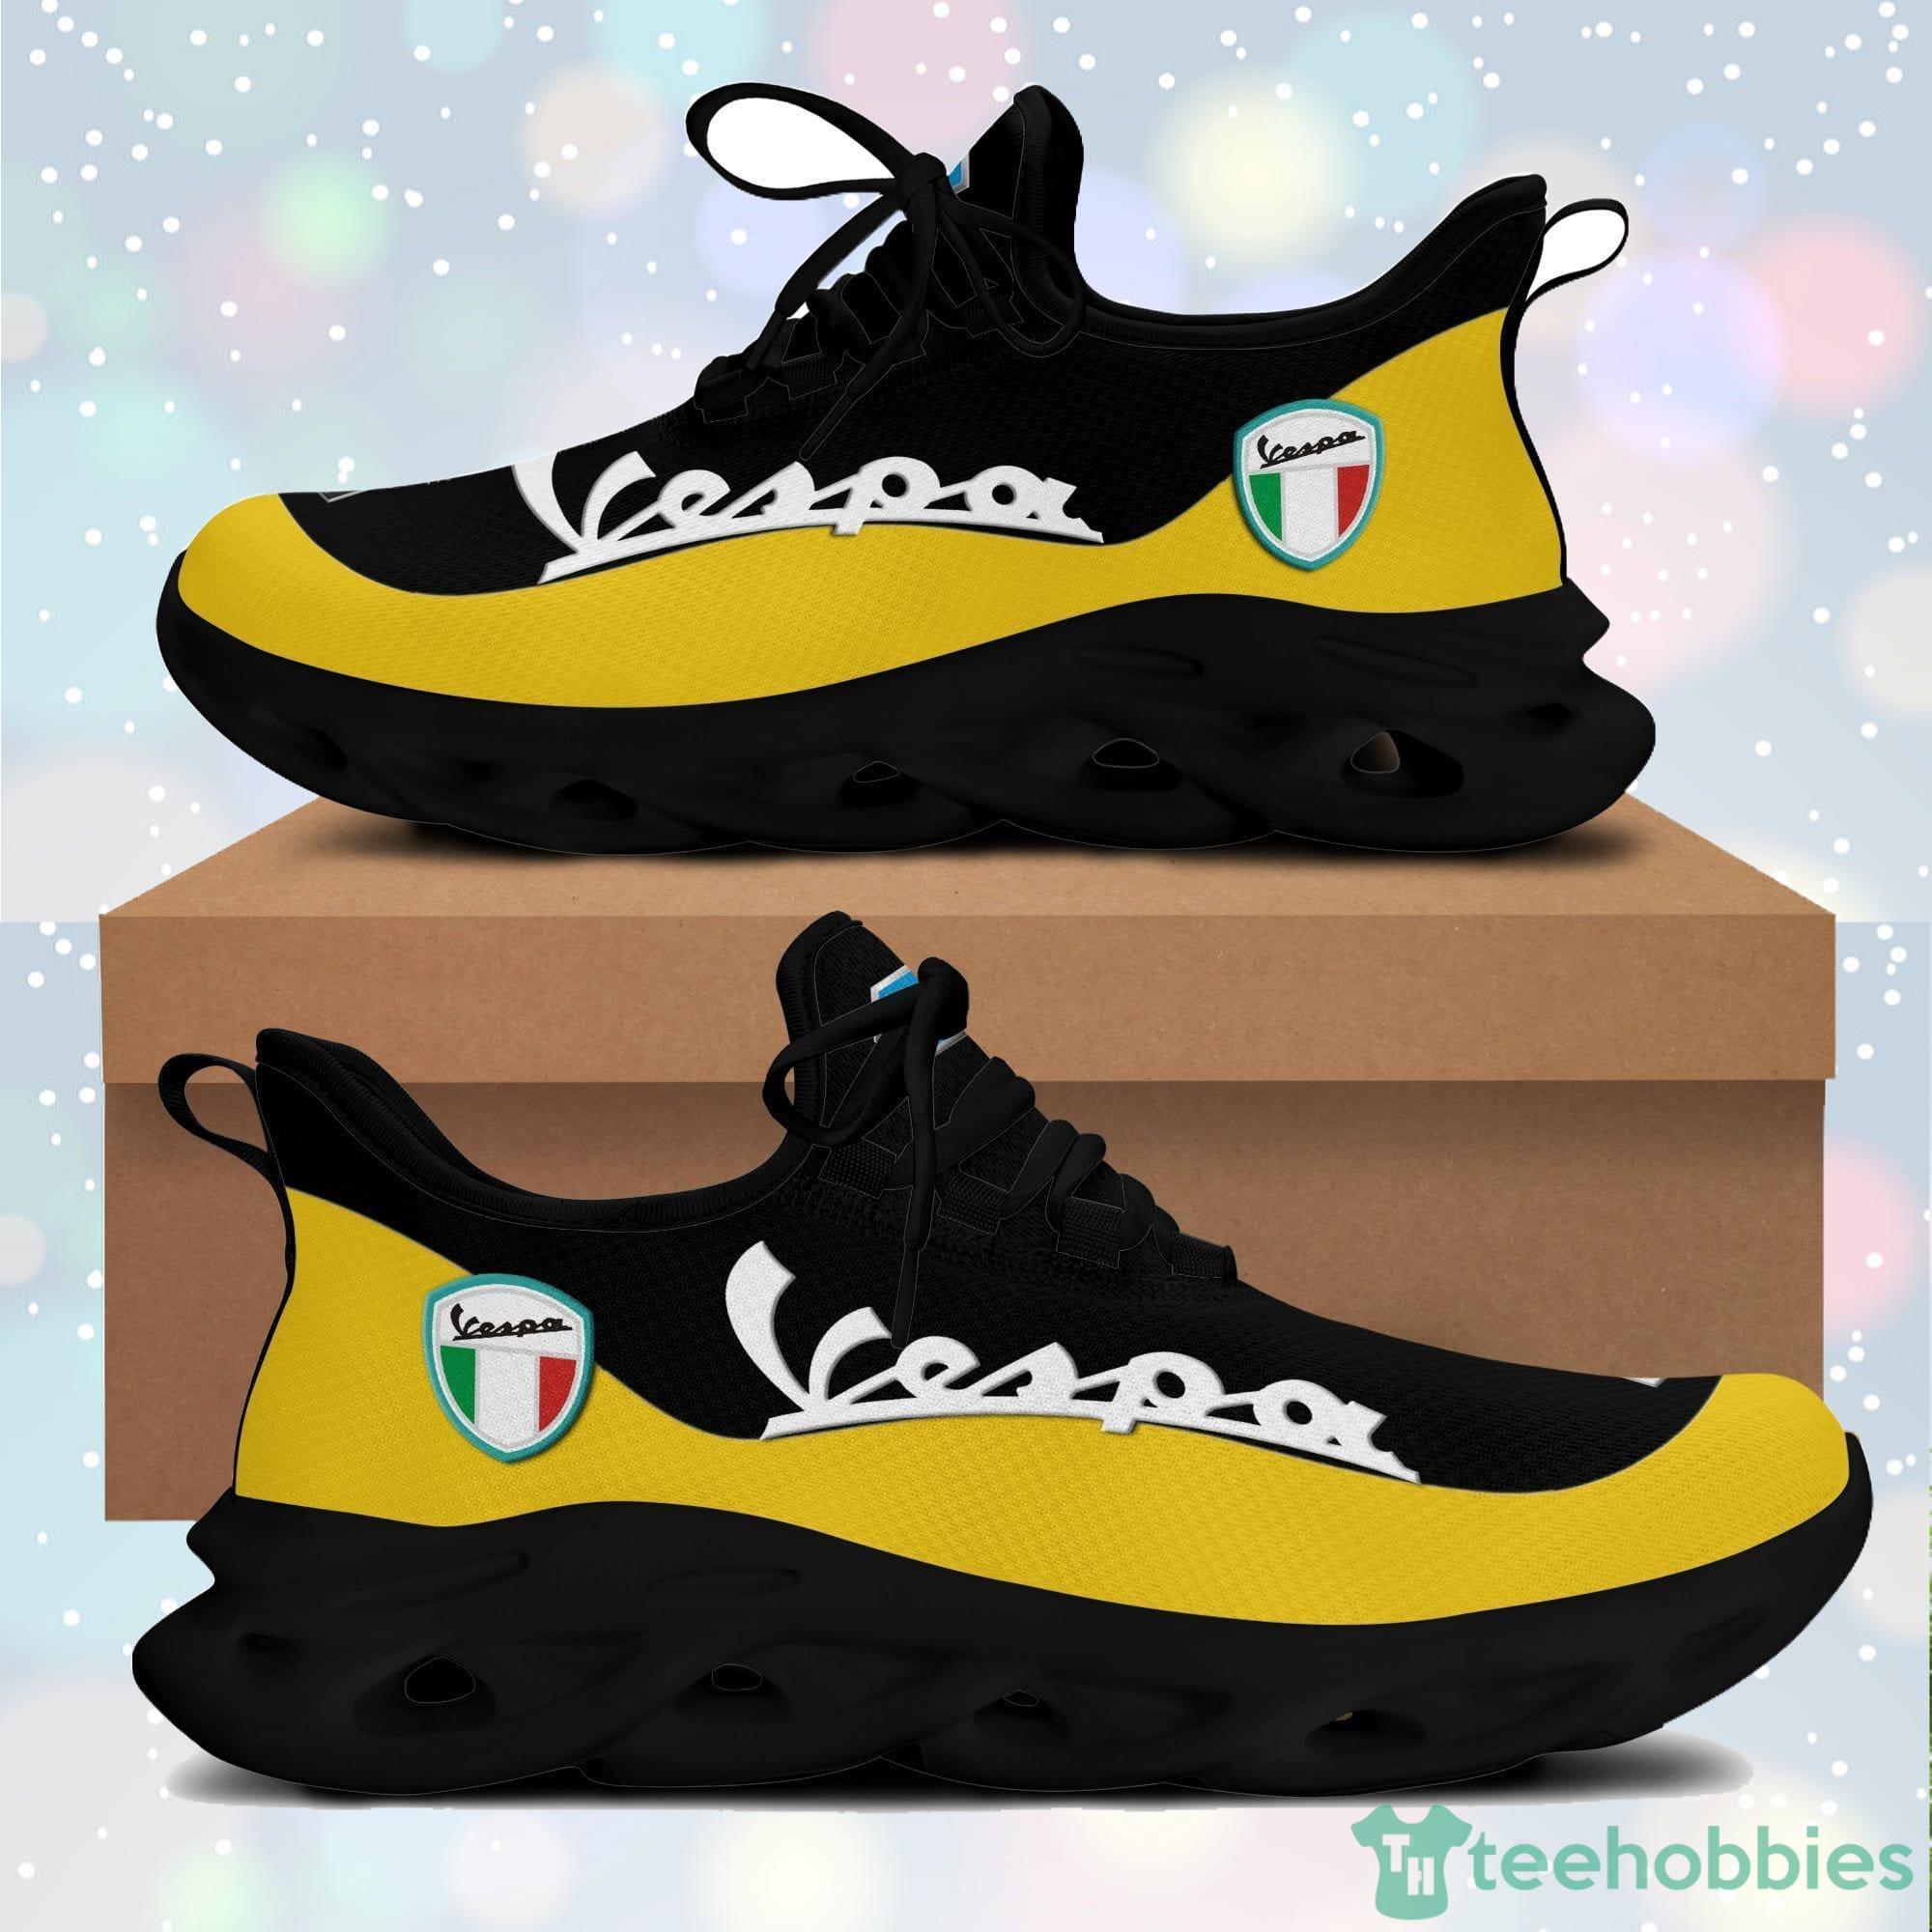 Vespa Custom Name Air Force Shoes Sport Sneakers For Men Women -  Freedomdesign